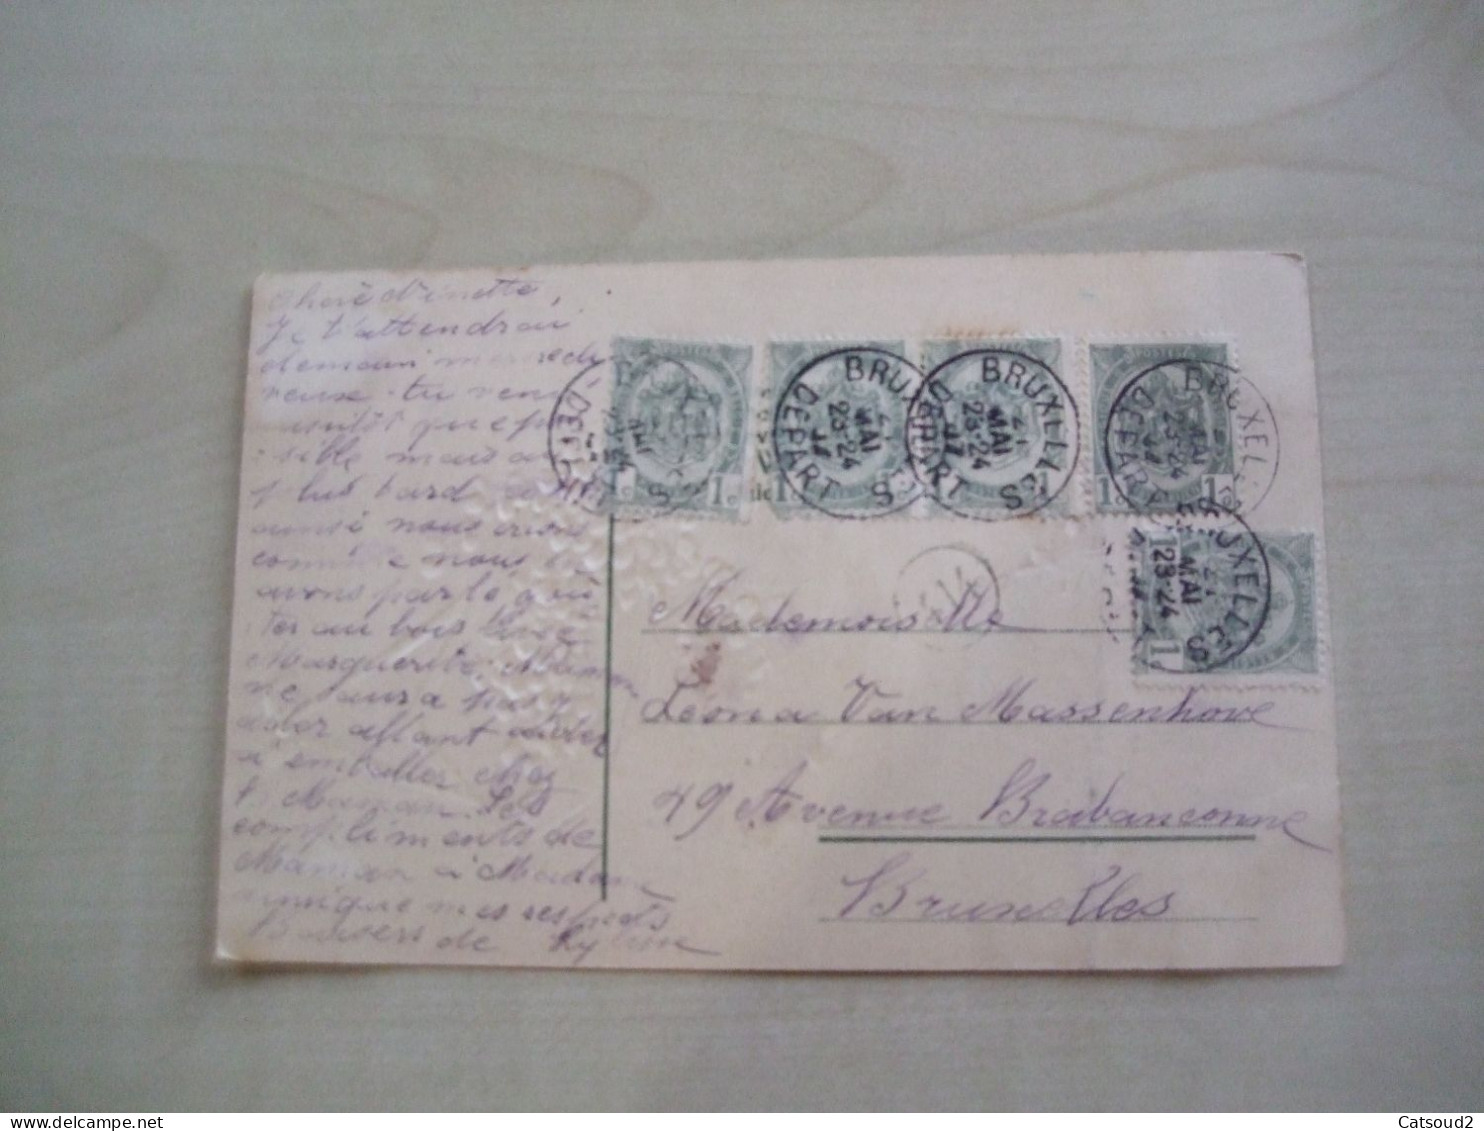 Carte Postale Ancienne 1907 FLEURS Violettes - Fiori